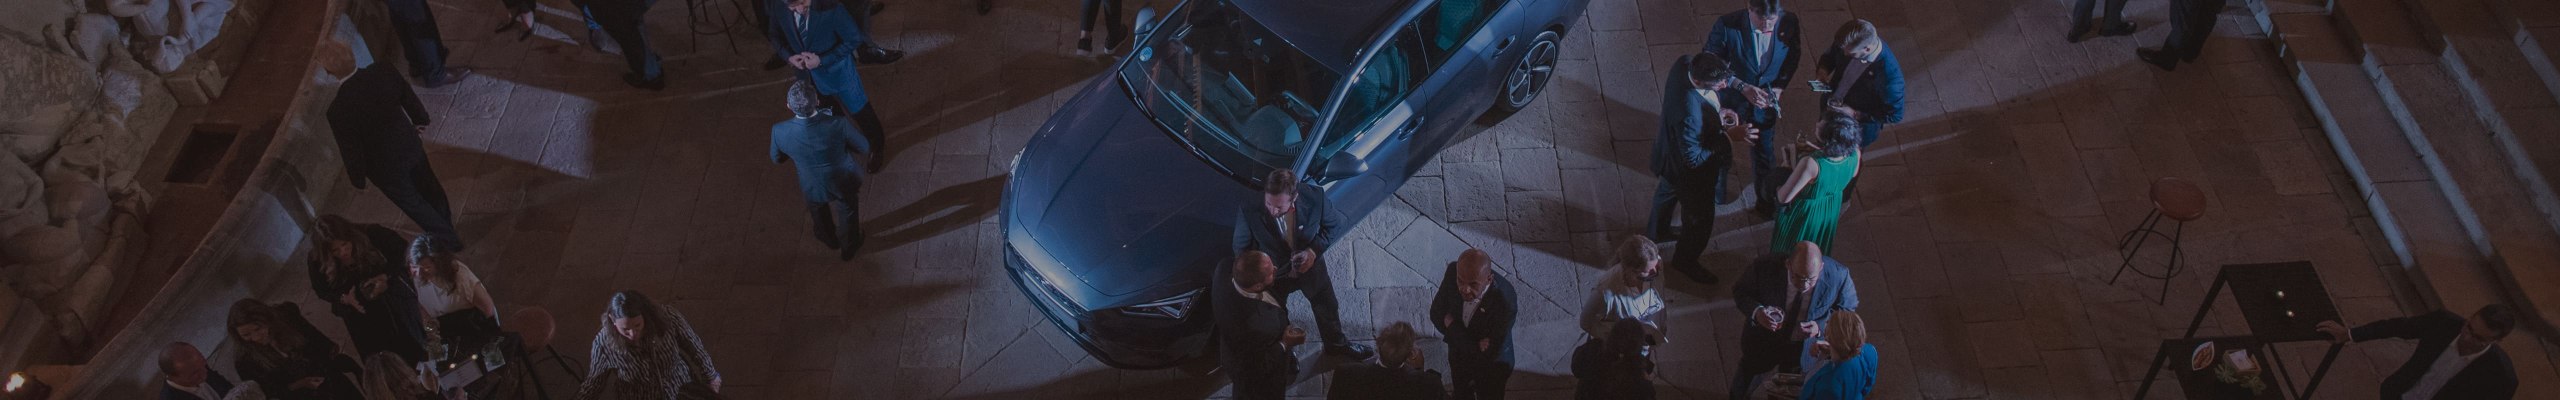 SEAT León recibe el premio “Best Buy Car en Europa 2021”, en la Gala AUTOBEST